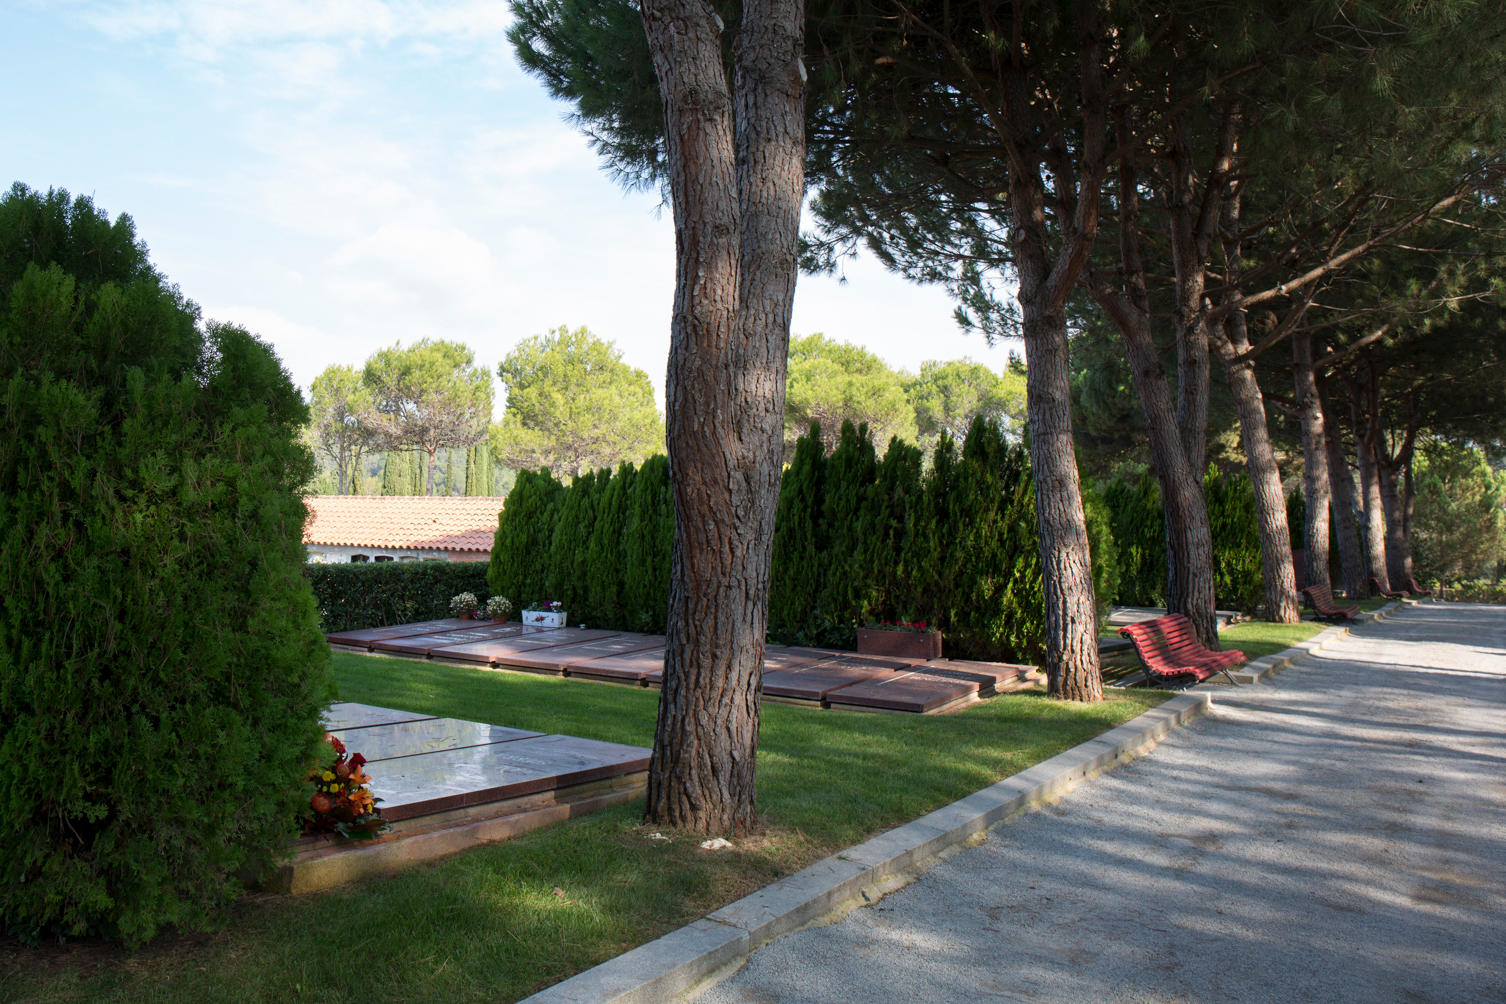 Images Cementiri Sant Cugat del Vallès